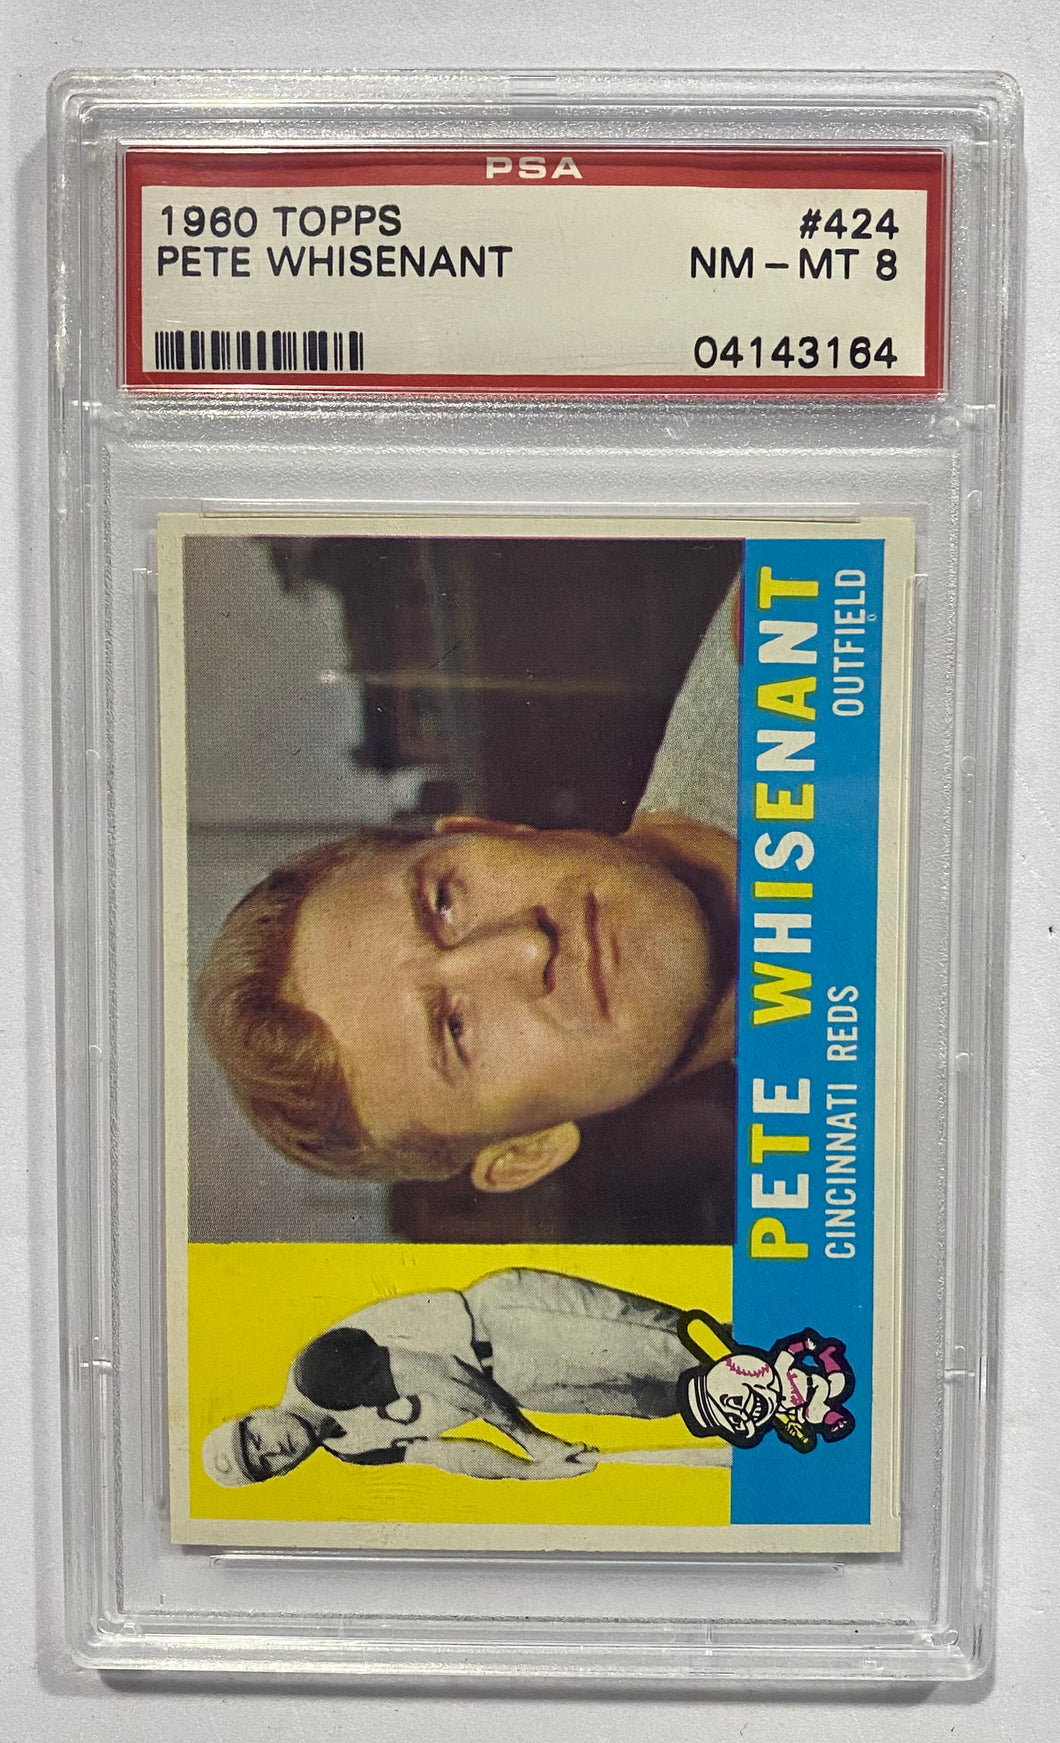 1960 Topps Pete Whisenant #424 PSA NM-MT 8